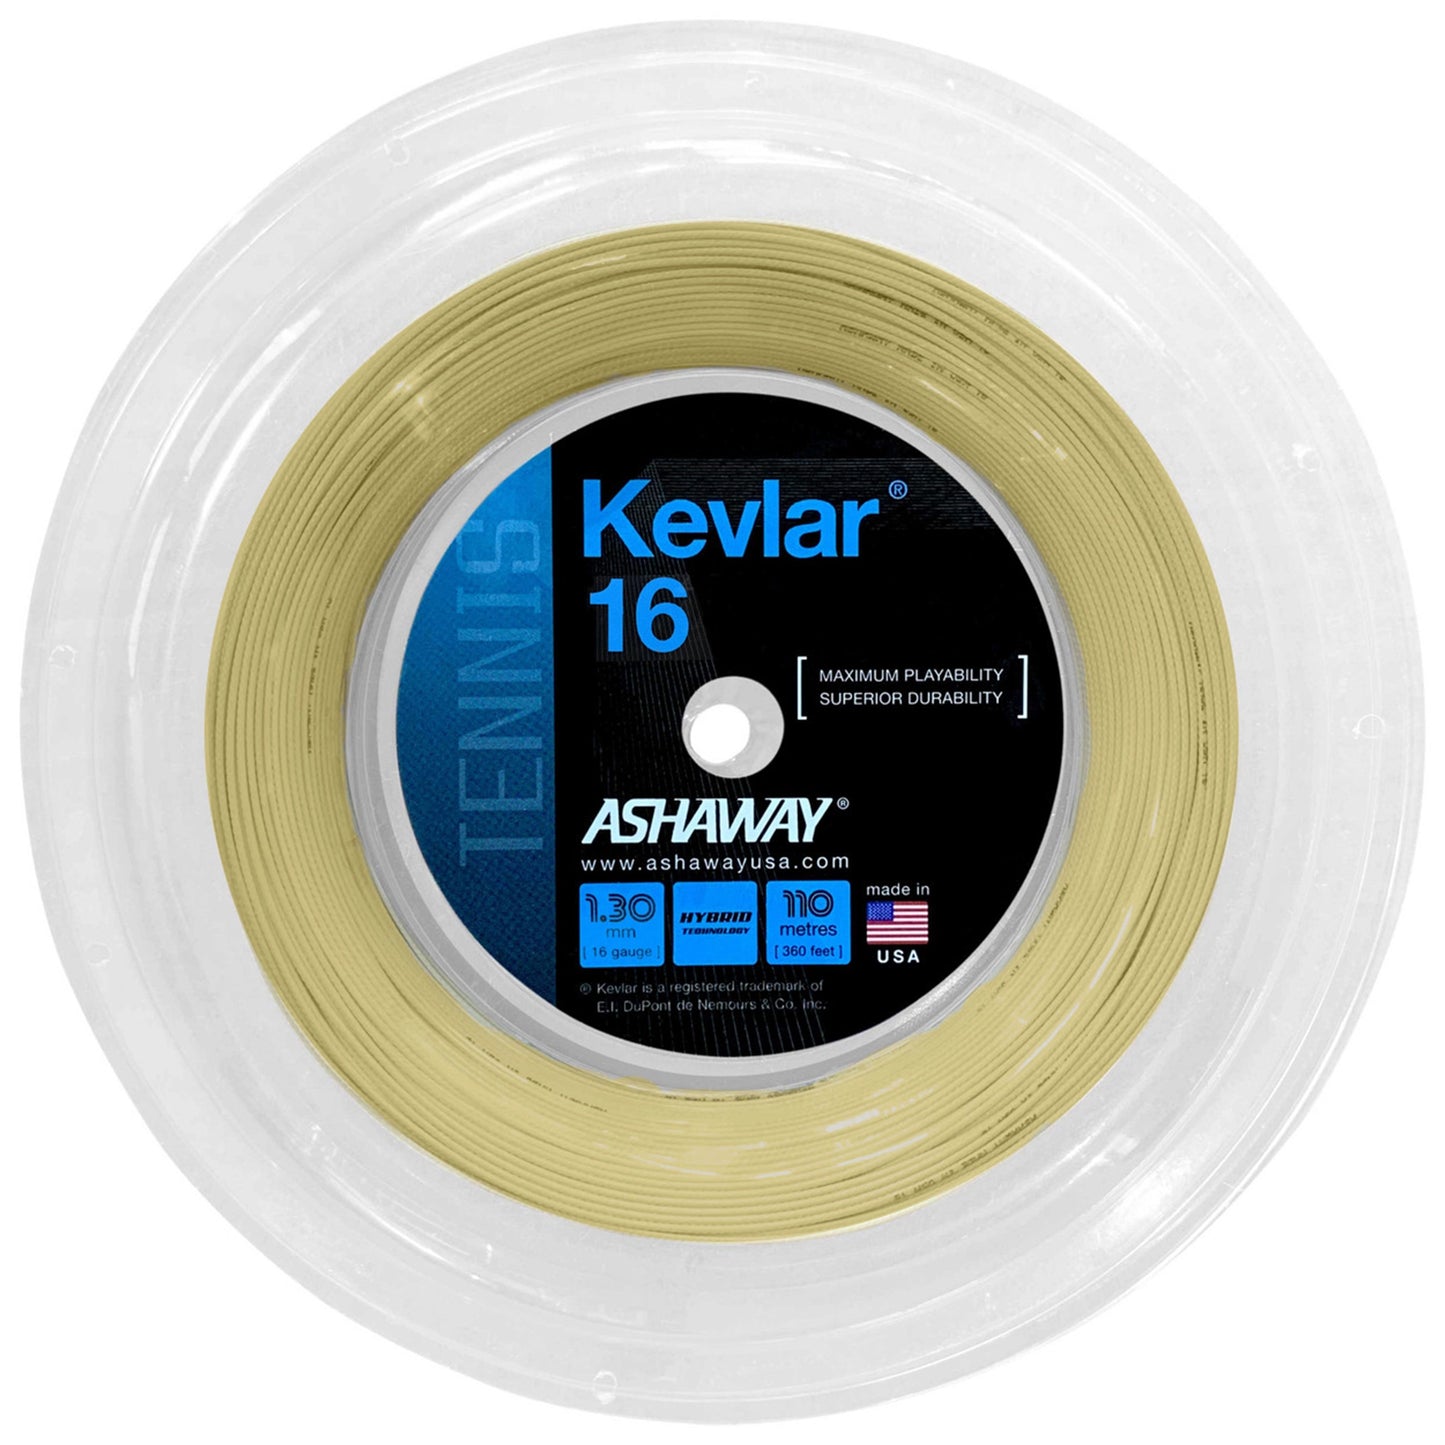 Ashaway Kevlar 16 Reel 110M gold (tennis)